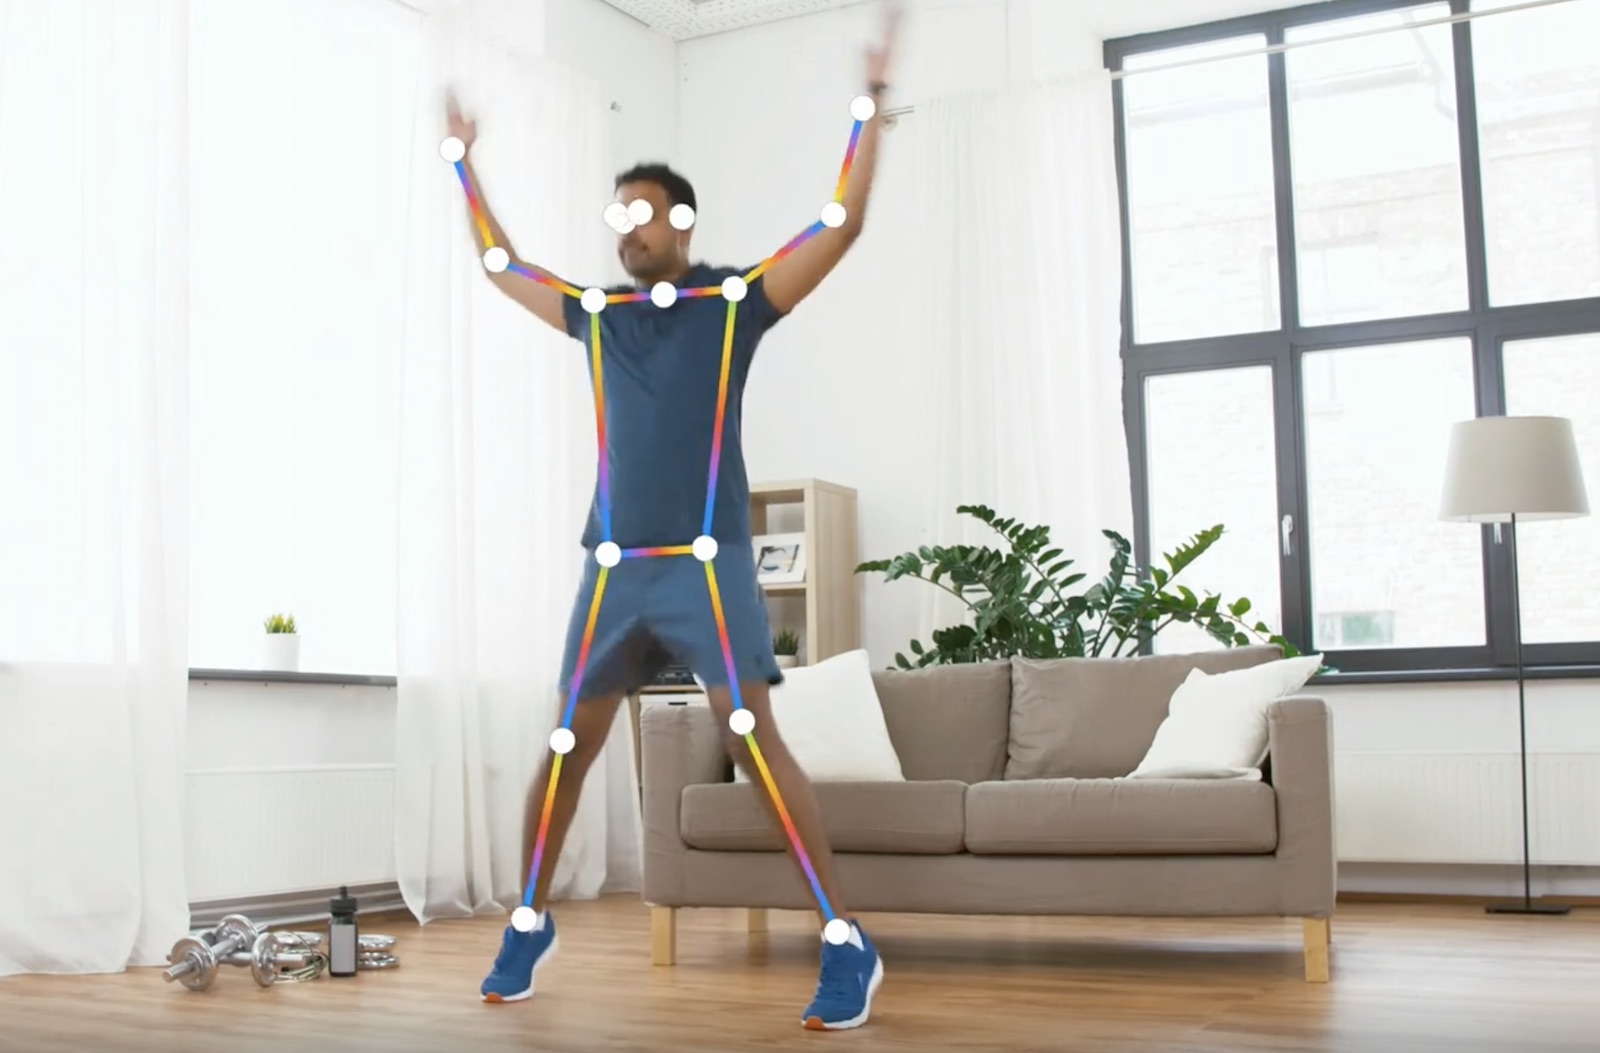 apple vision framework human body pose detection jumping jack